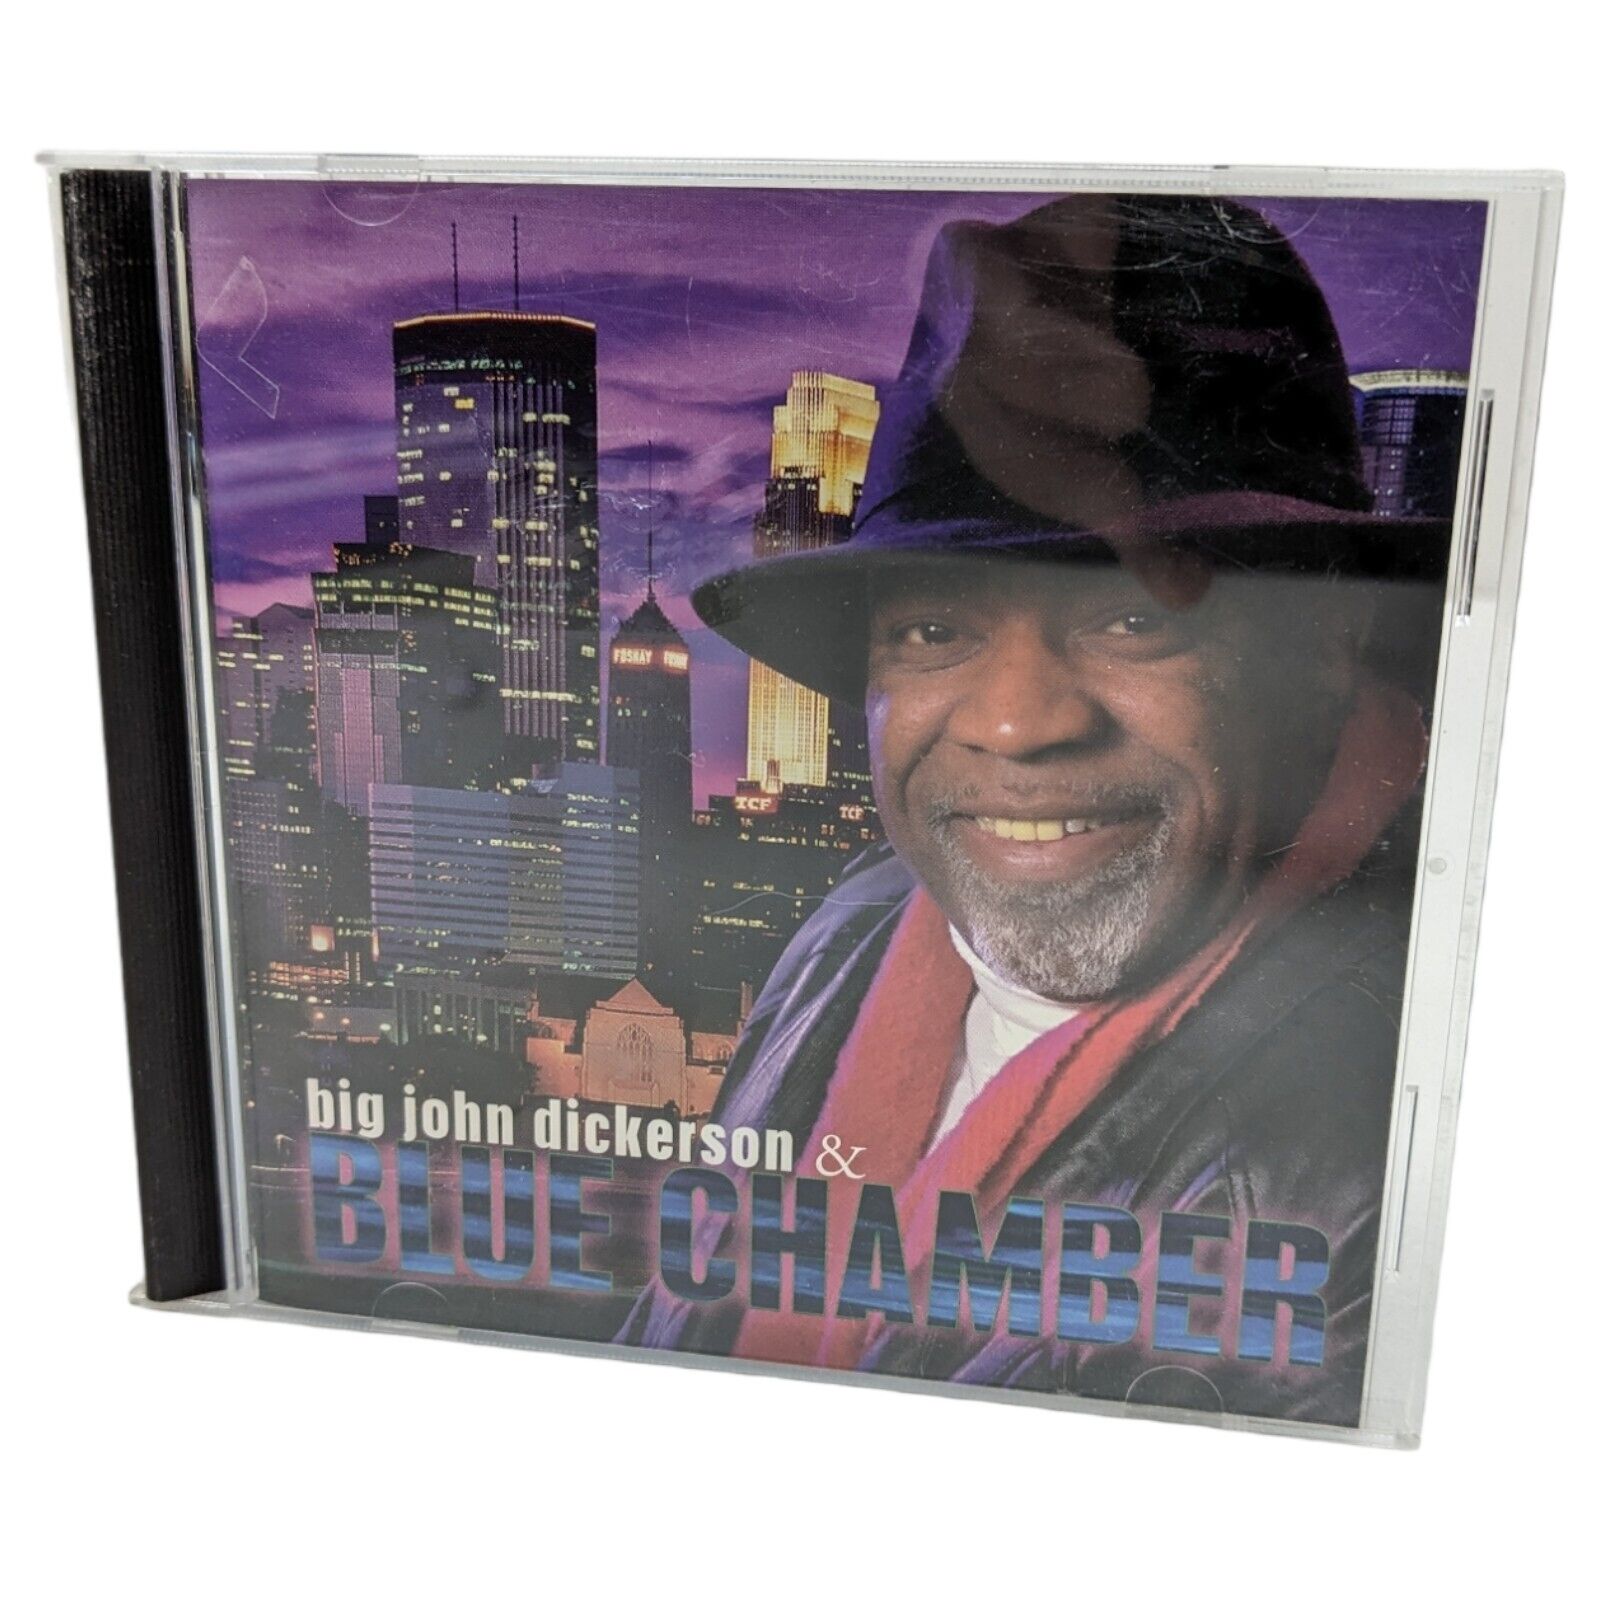 Big John Dickerson & Blue Chamber by Big John Dickerson (CD, 1997) RARE